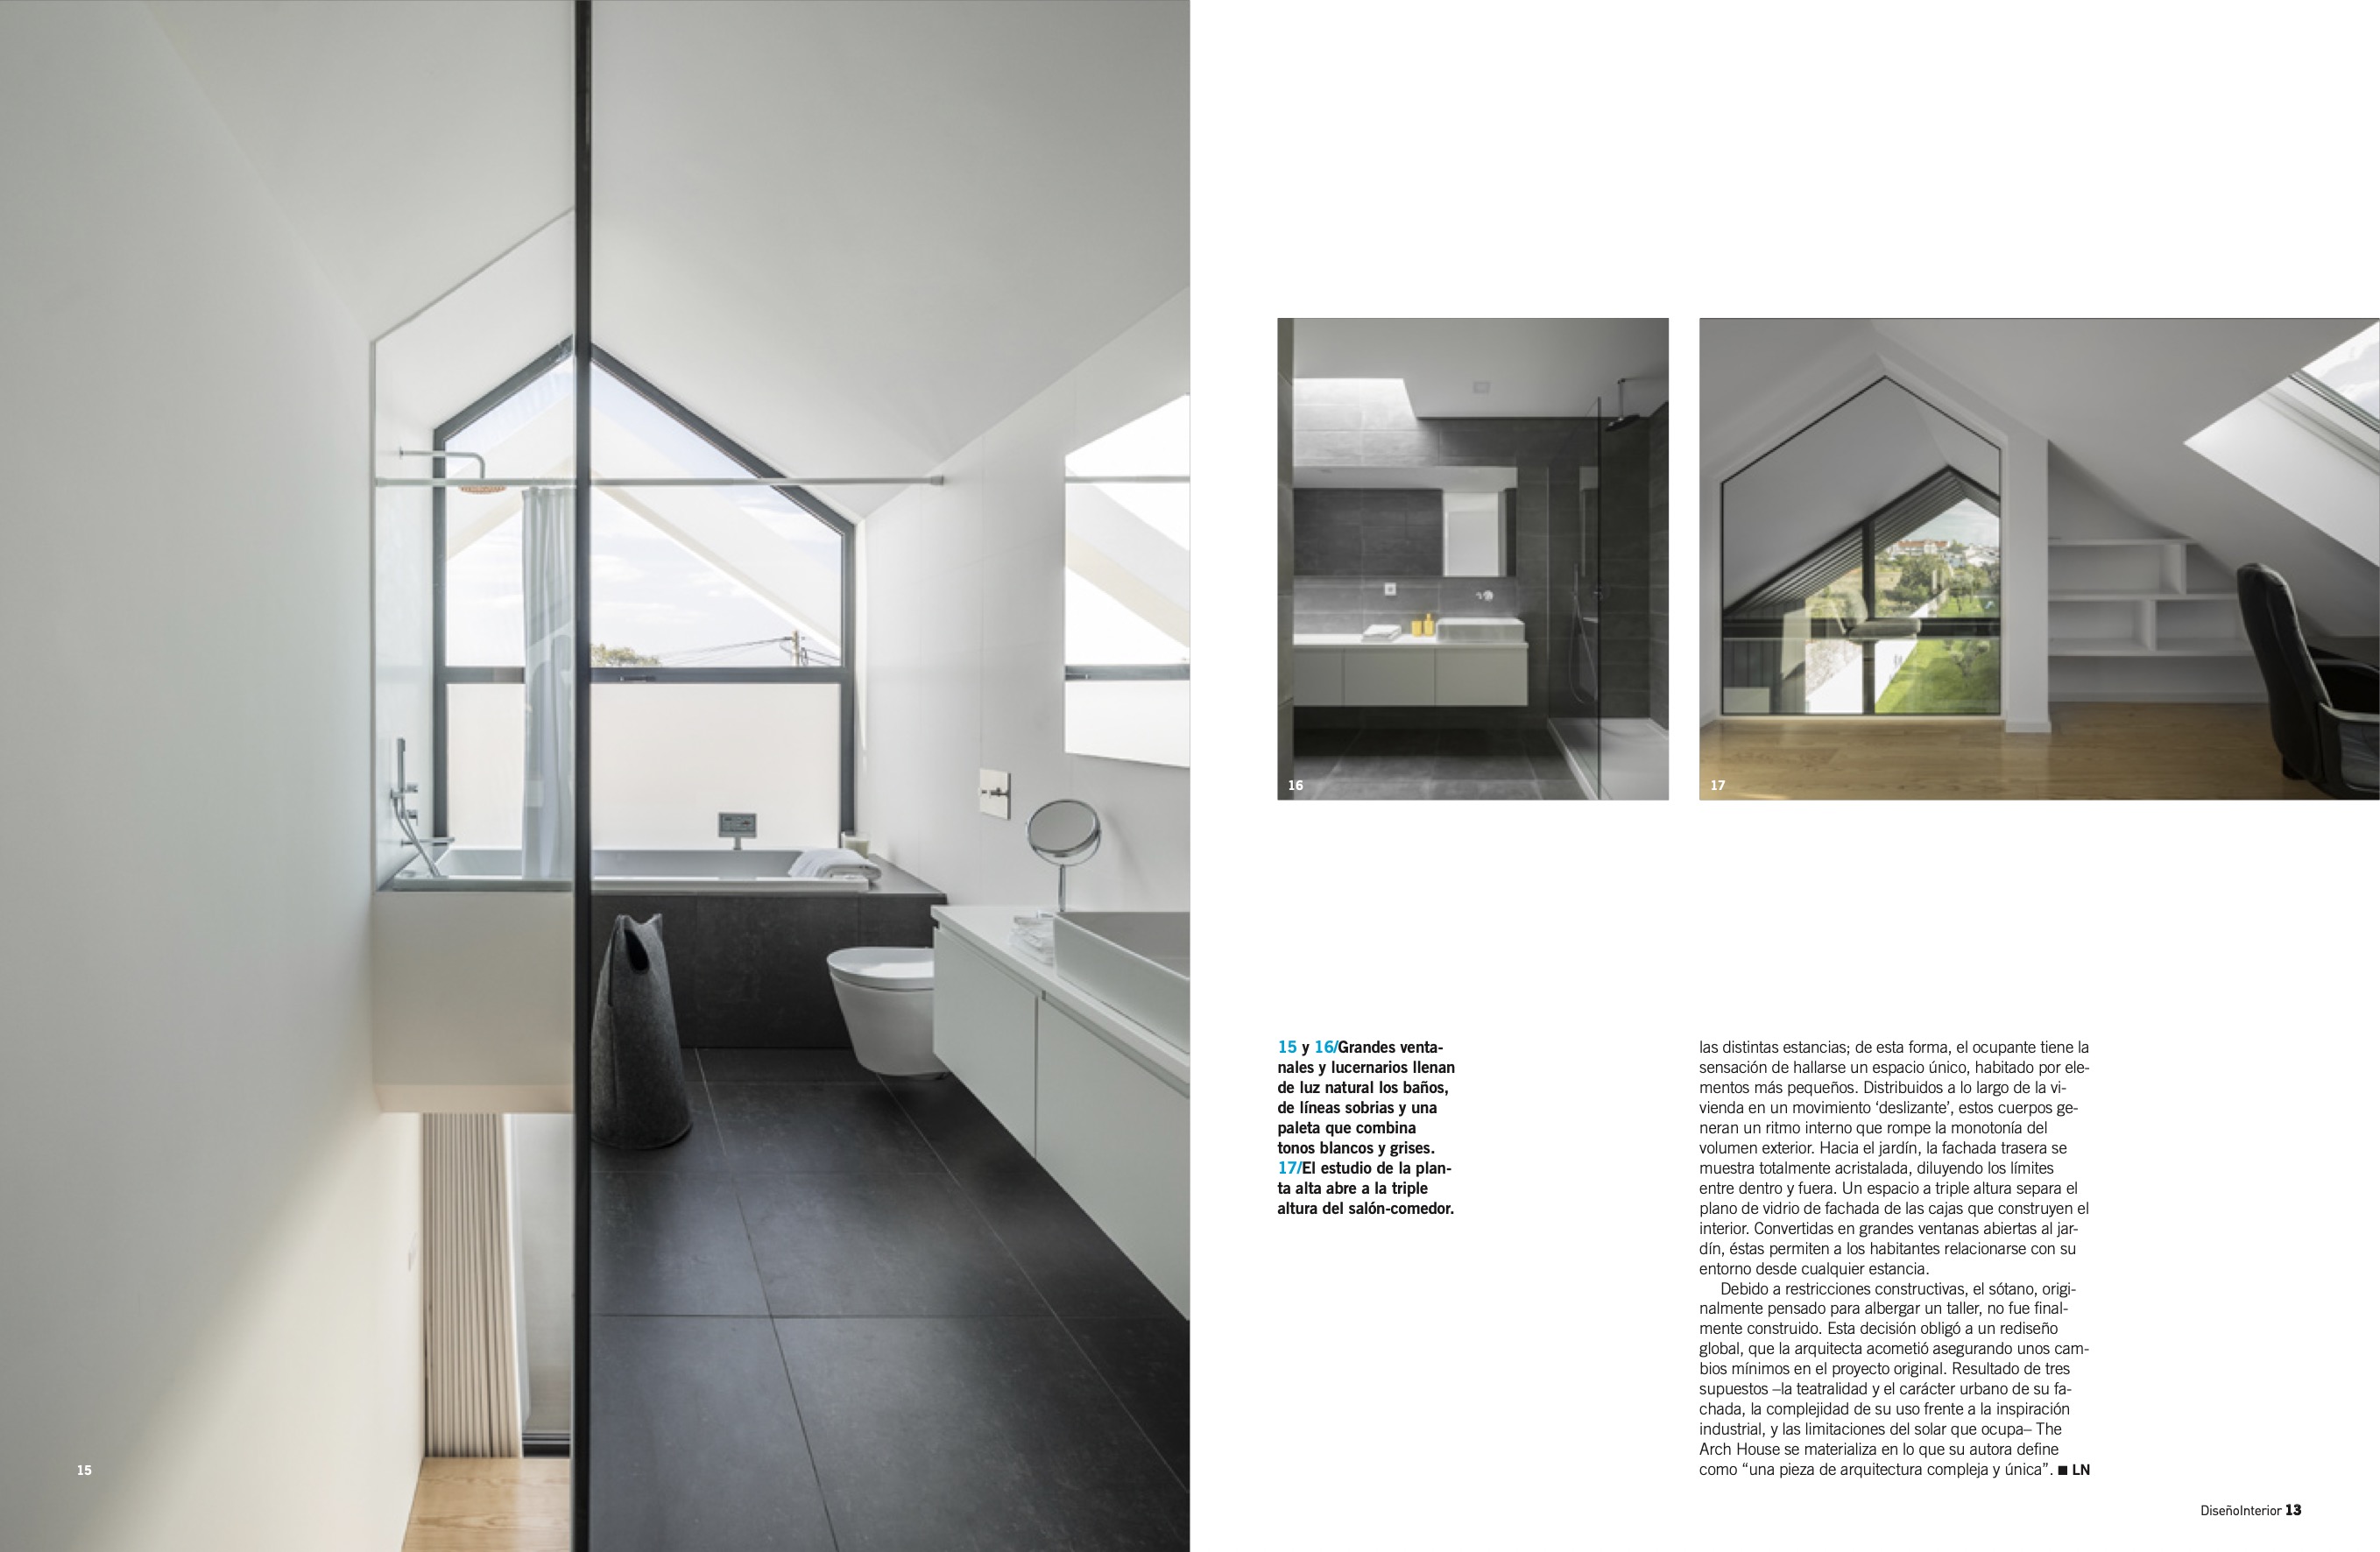 Diseño Interior #314 do atelier Ivo Tavares com fotografia arquitetura de ivo tavares studio - architectural photography